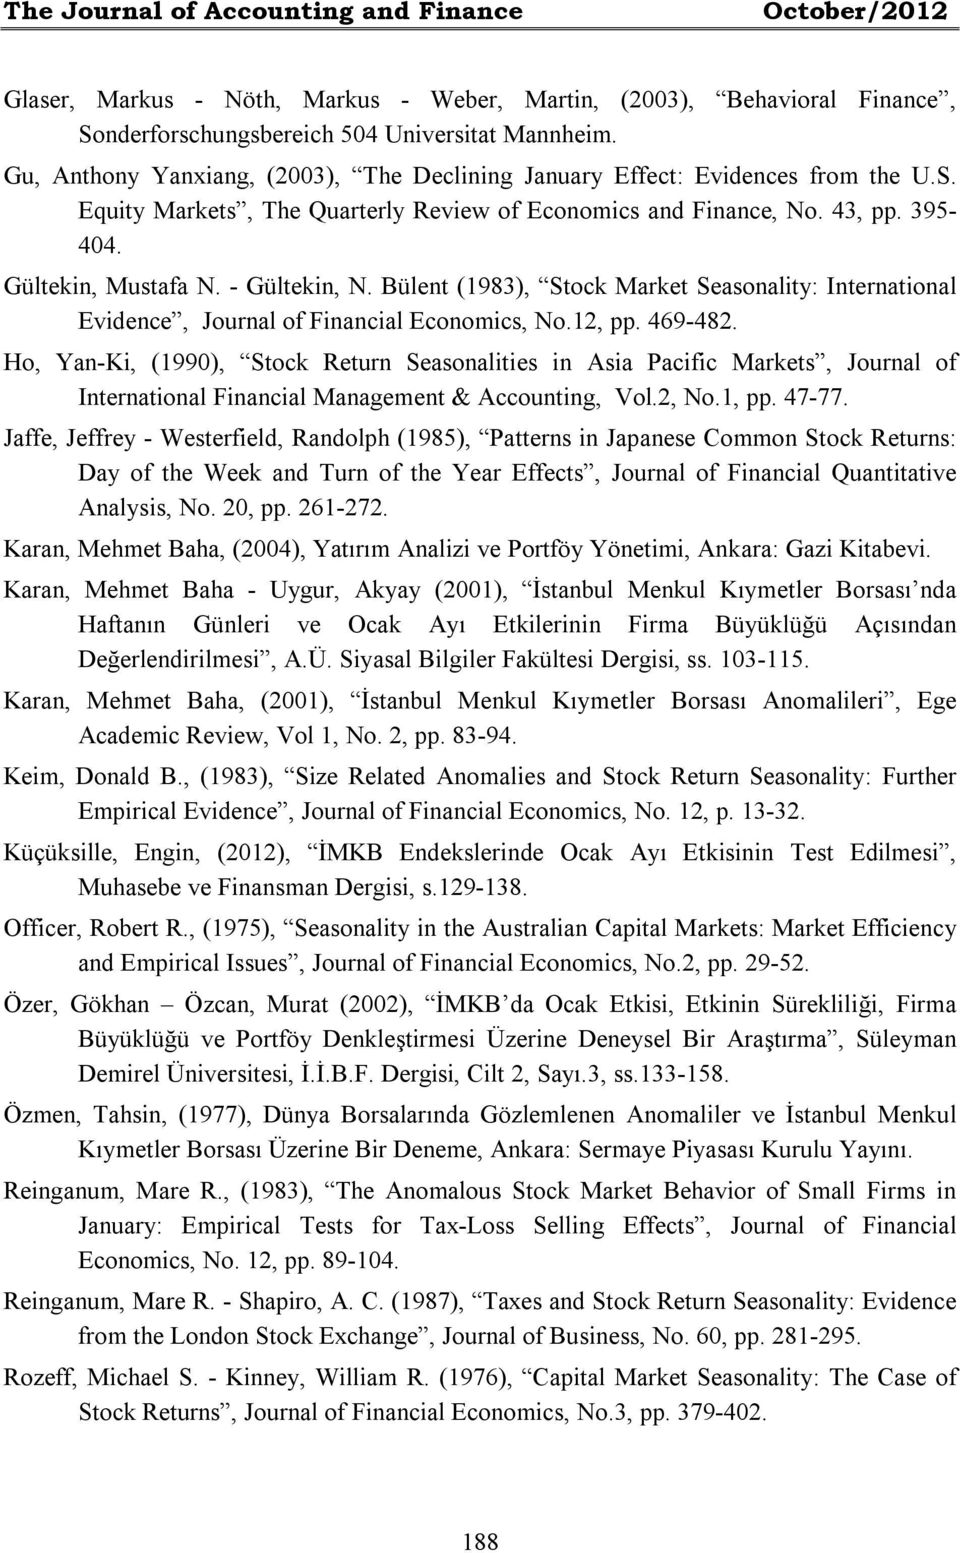 - Gültekin, N. Bülent (1983), Stock Market Seasonality: International Evidence, Journal of Financial Economics, No.12, pp. 469-482.